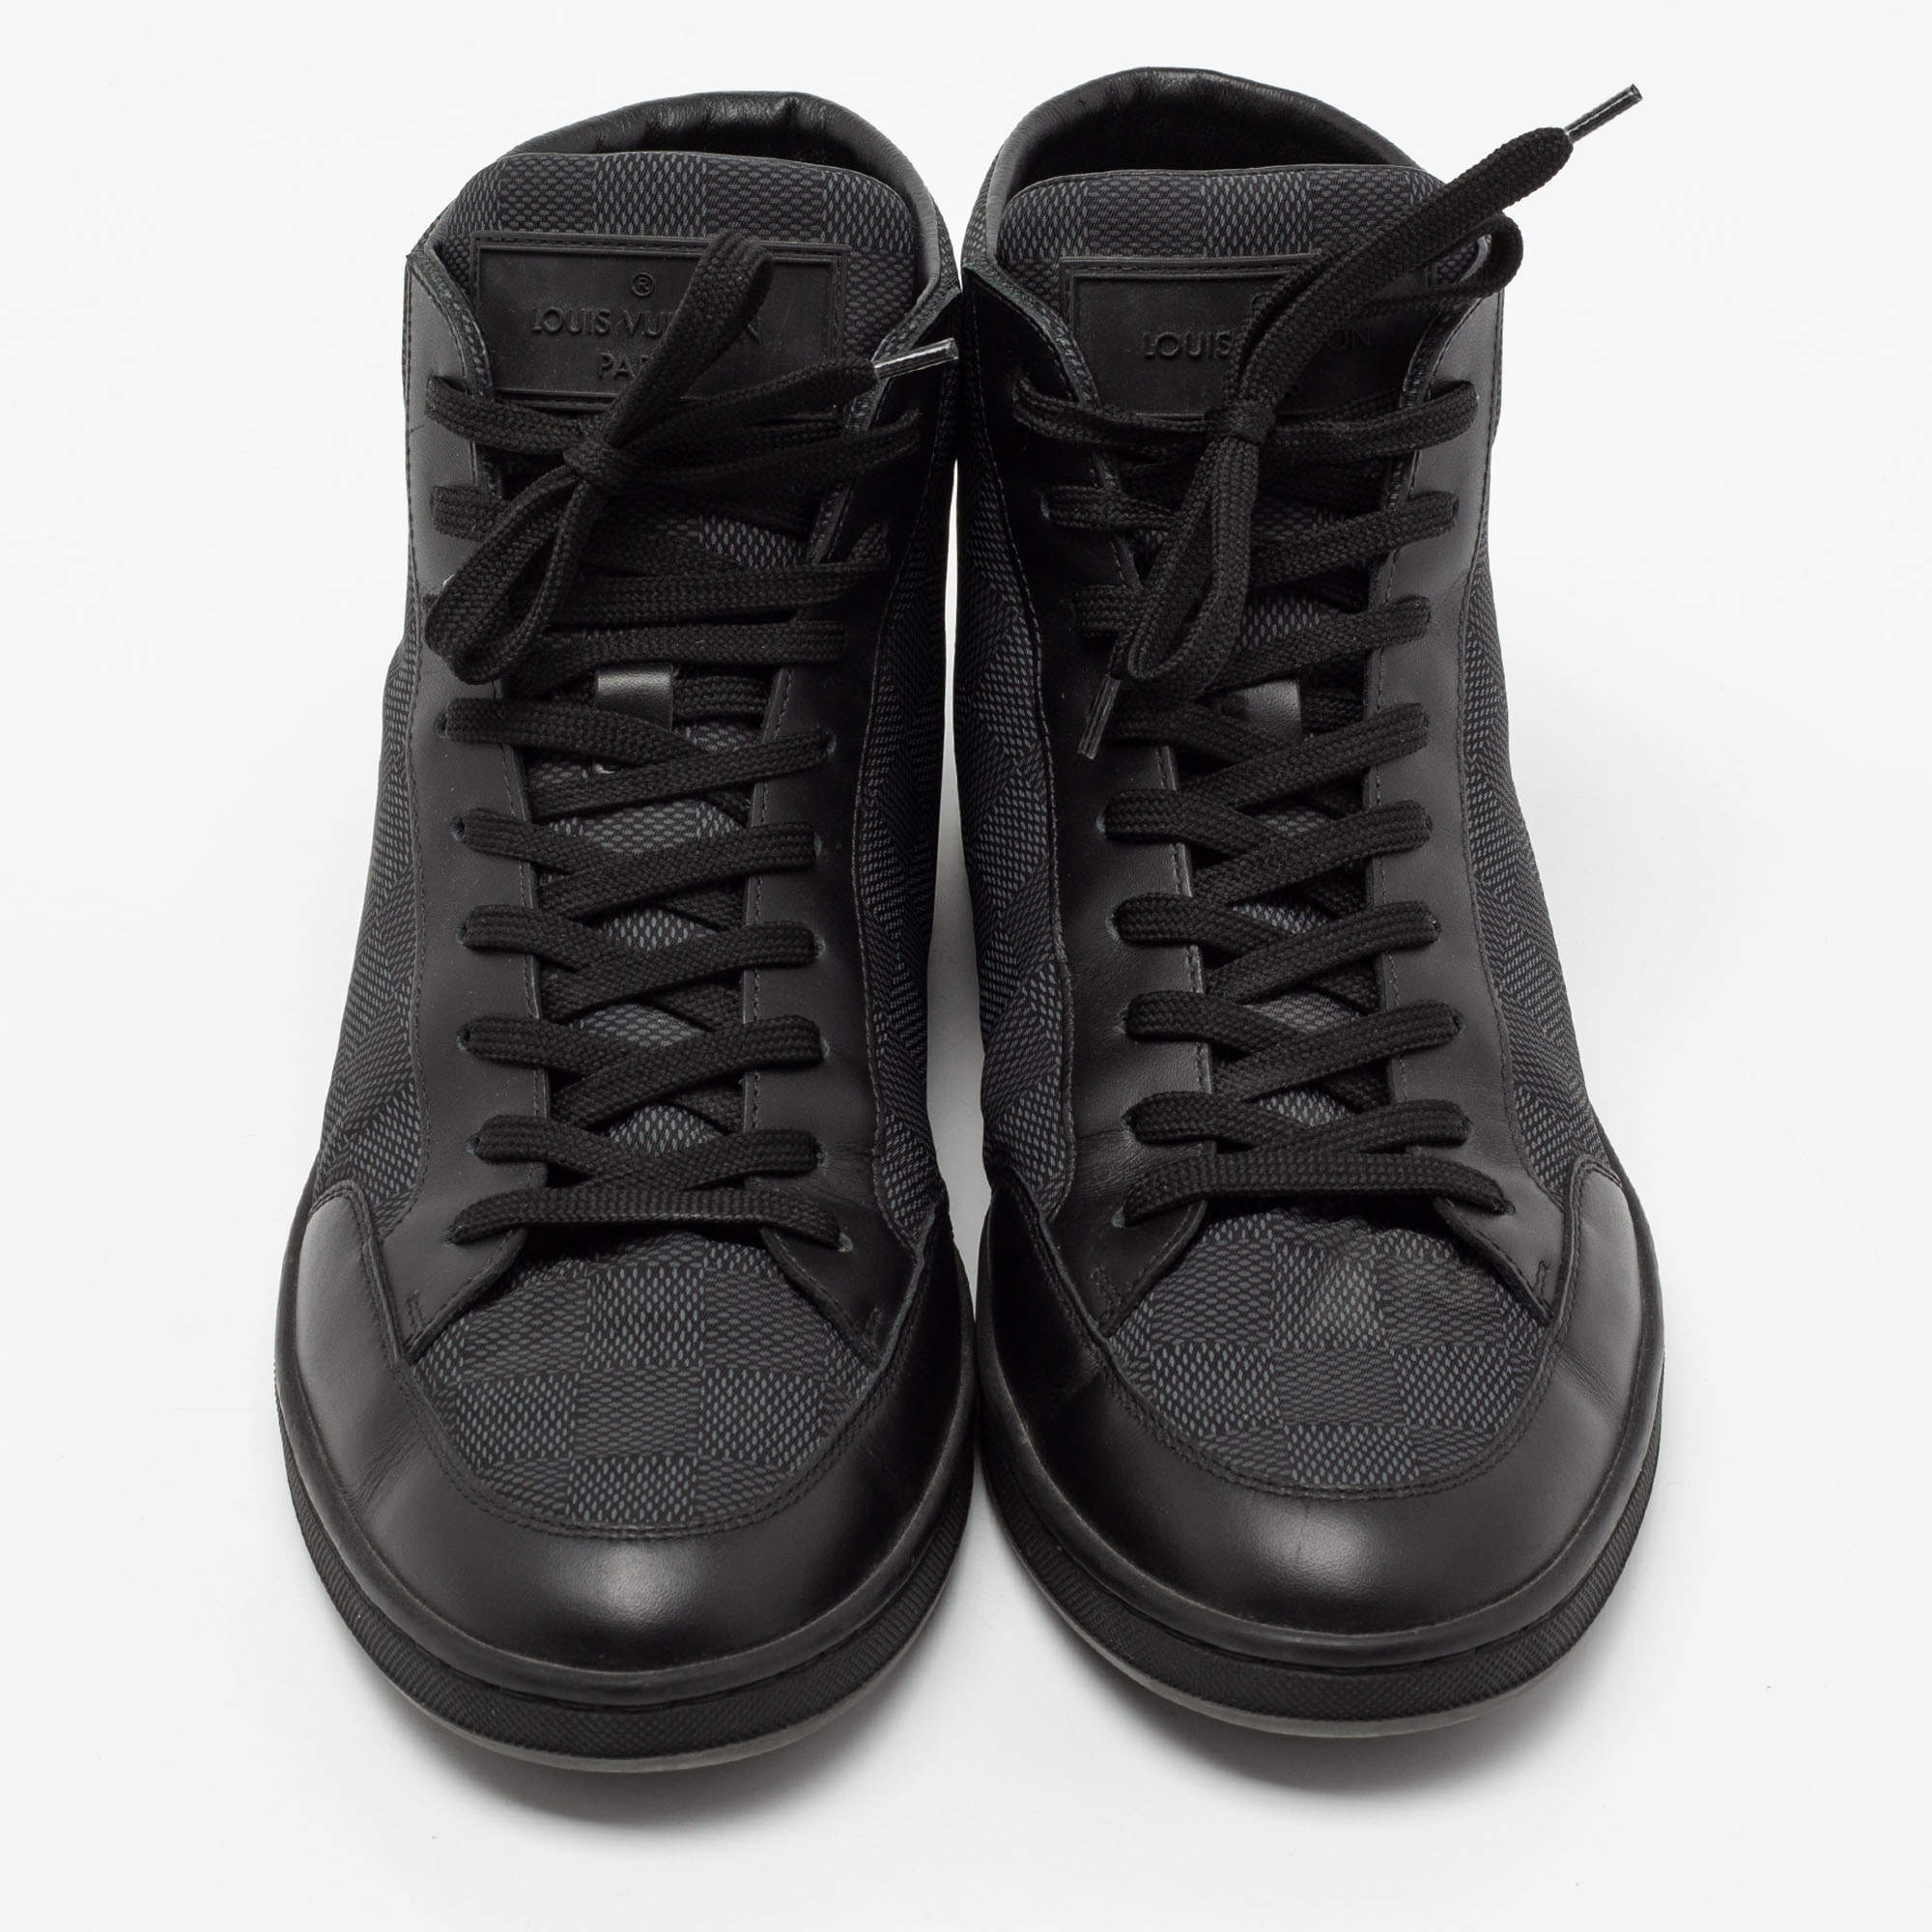 Sneakers Louis Vuitton Louis Vuitton Hi-Top Sneakers in Black Leather Size 41 EU